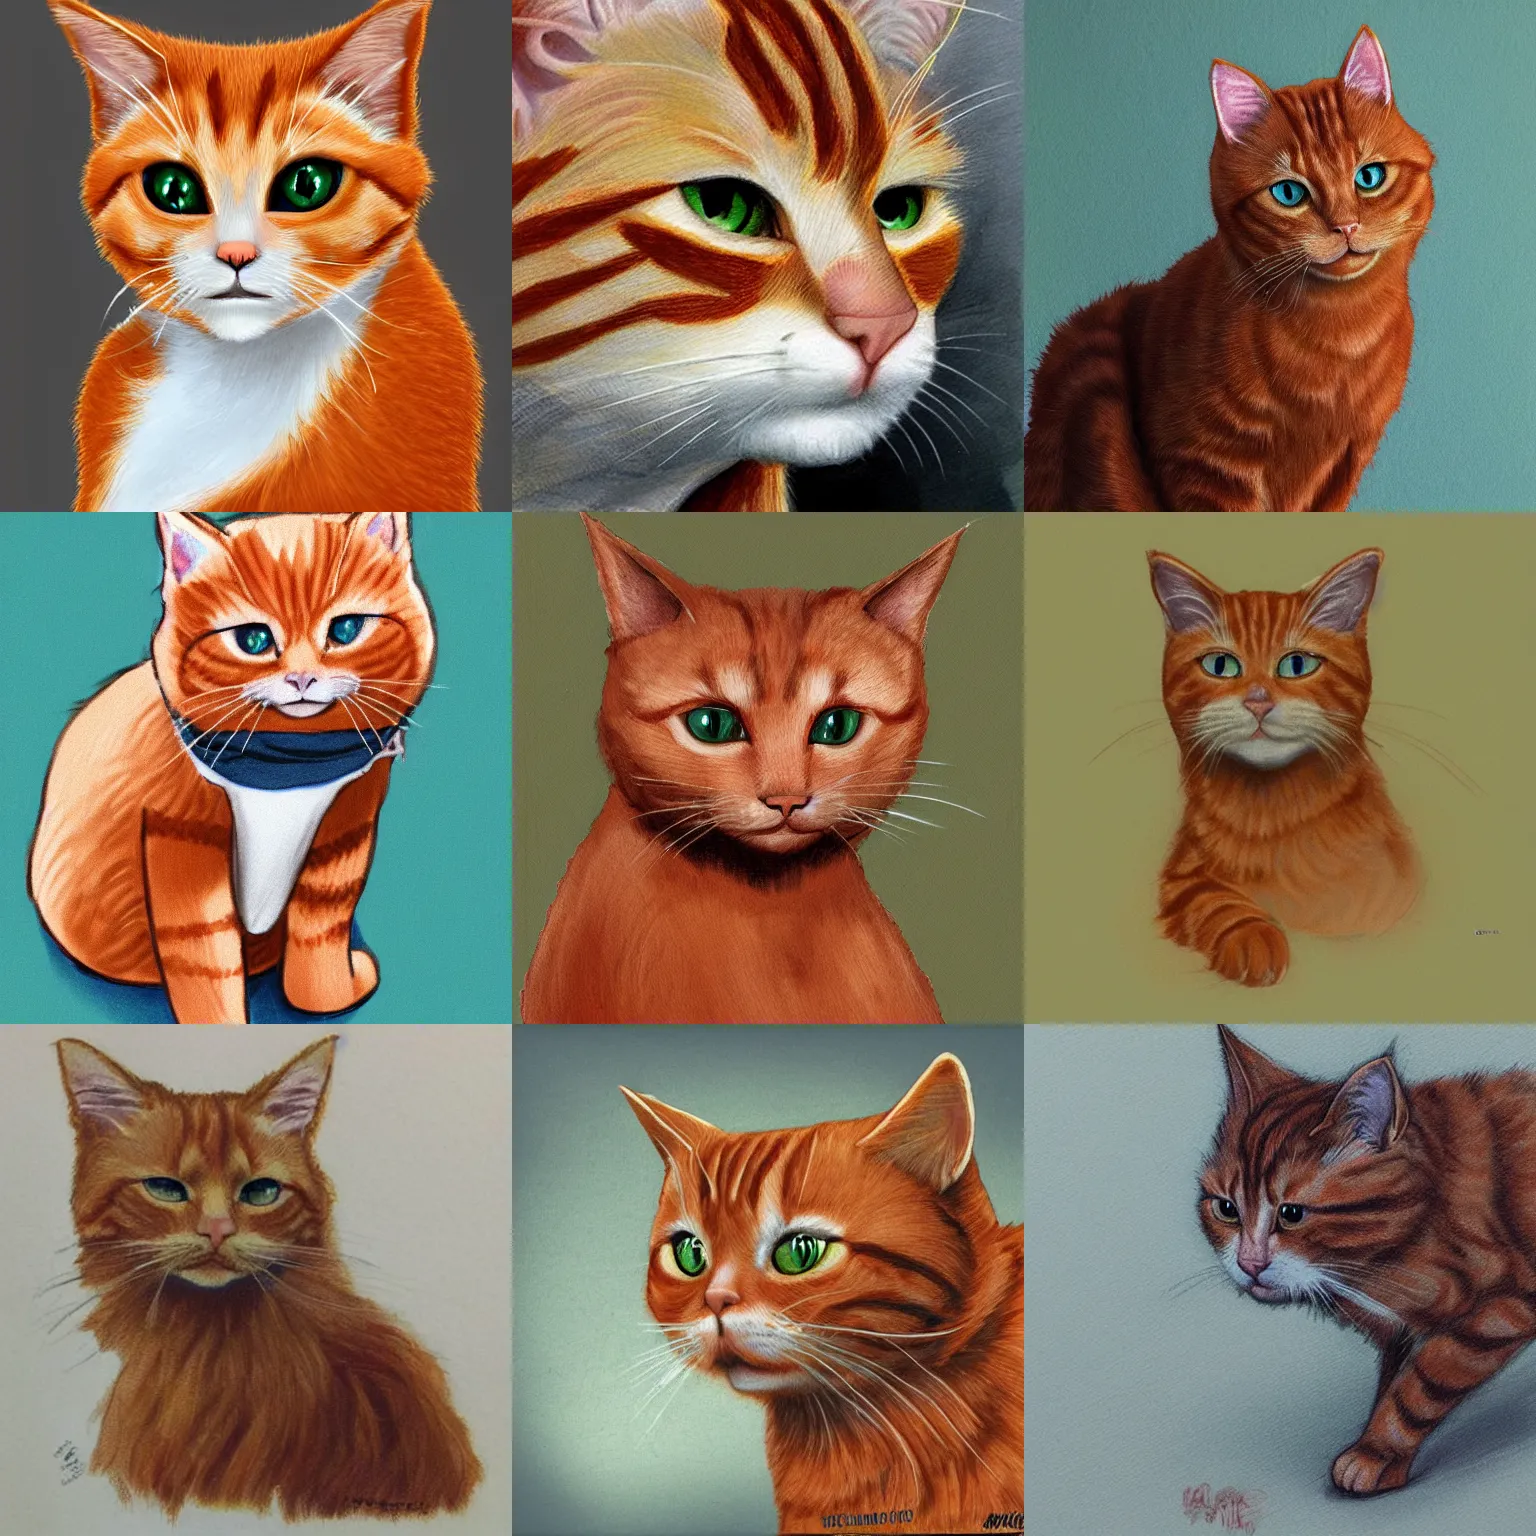 Prompt: ginger cat, concept art